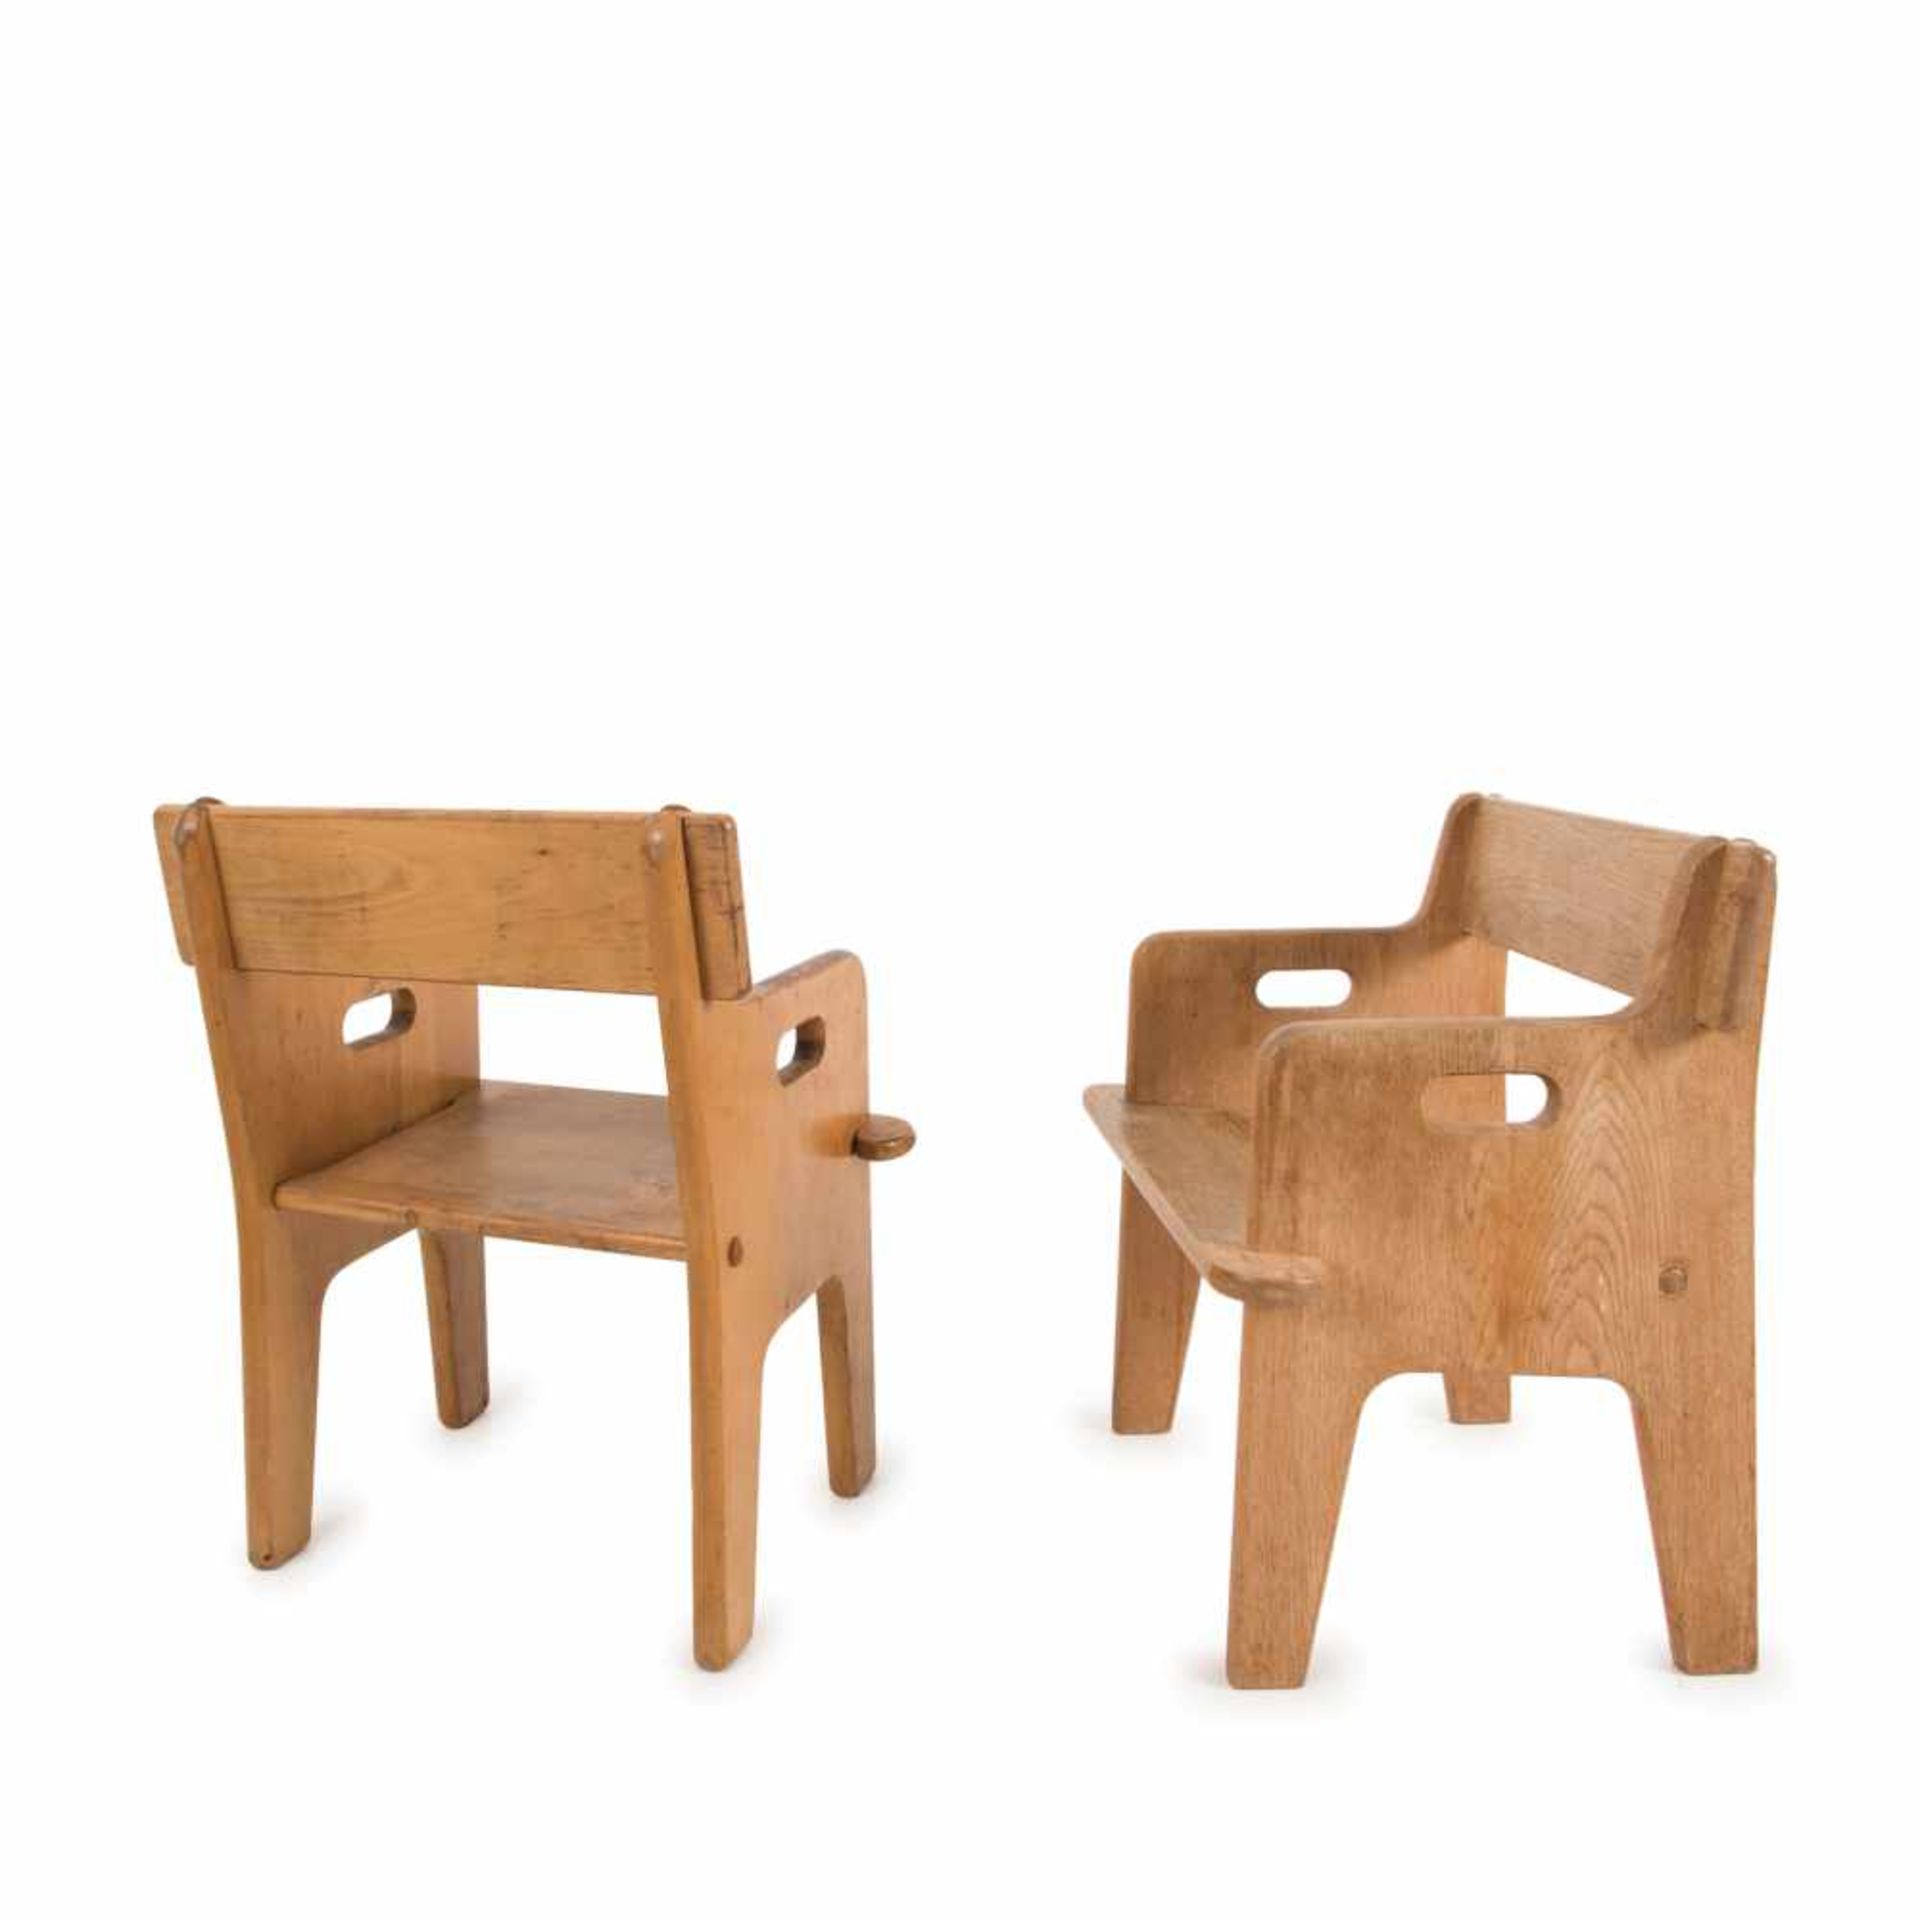 Zwei Kinderstühle 'Peter's chair', 1944 Hans J. Wegner H. 46 x 42,5 x 31,5 cm. Getama, Gedsted.